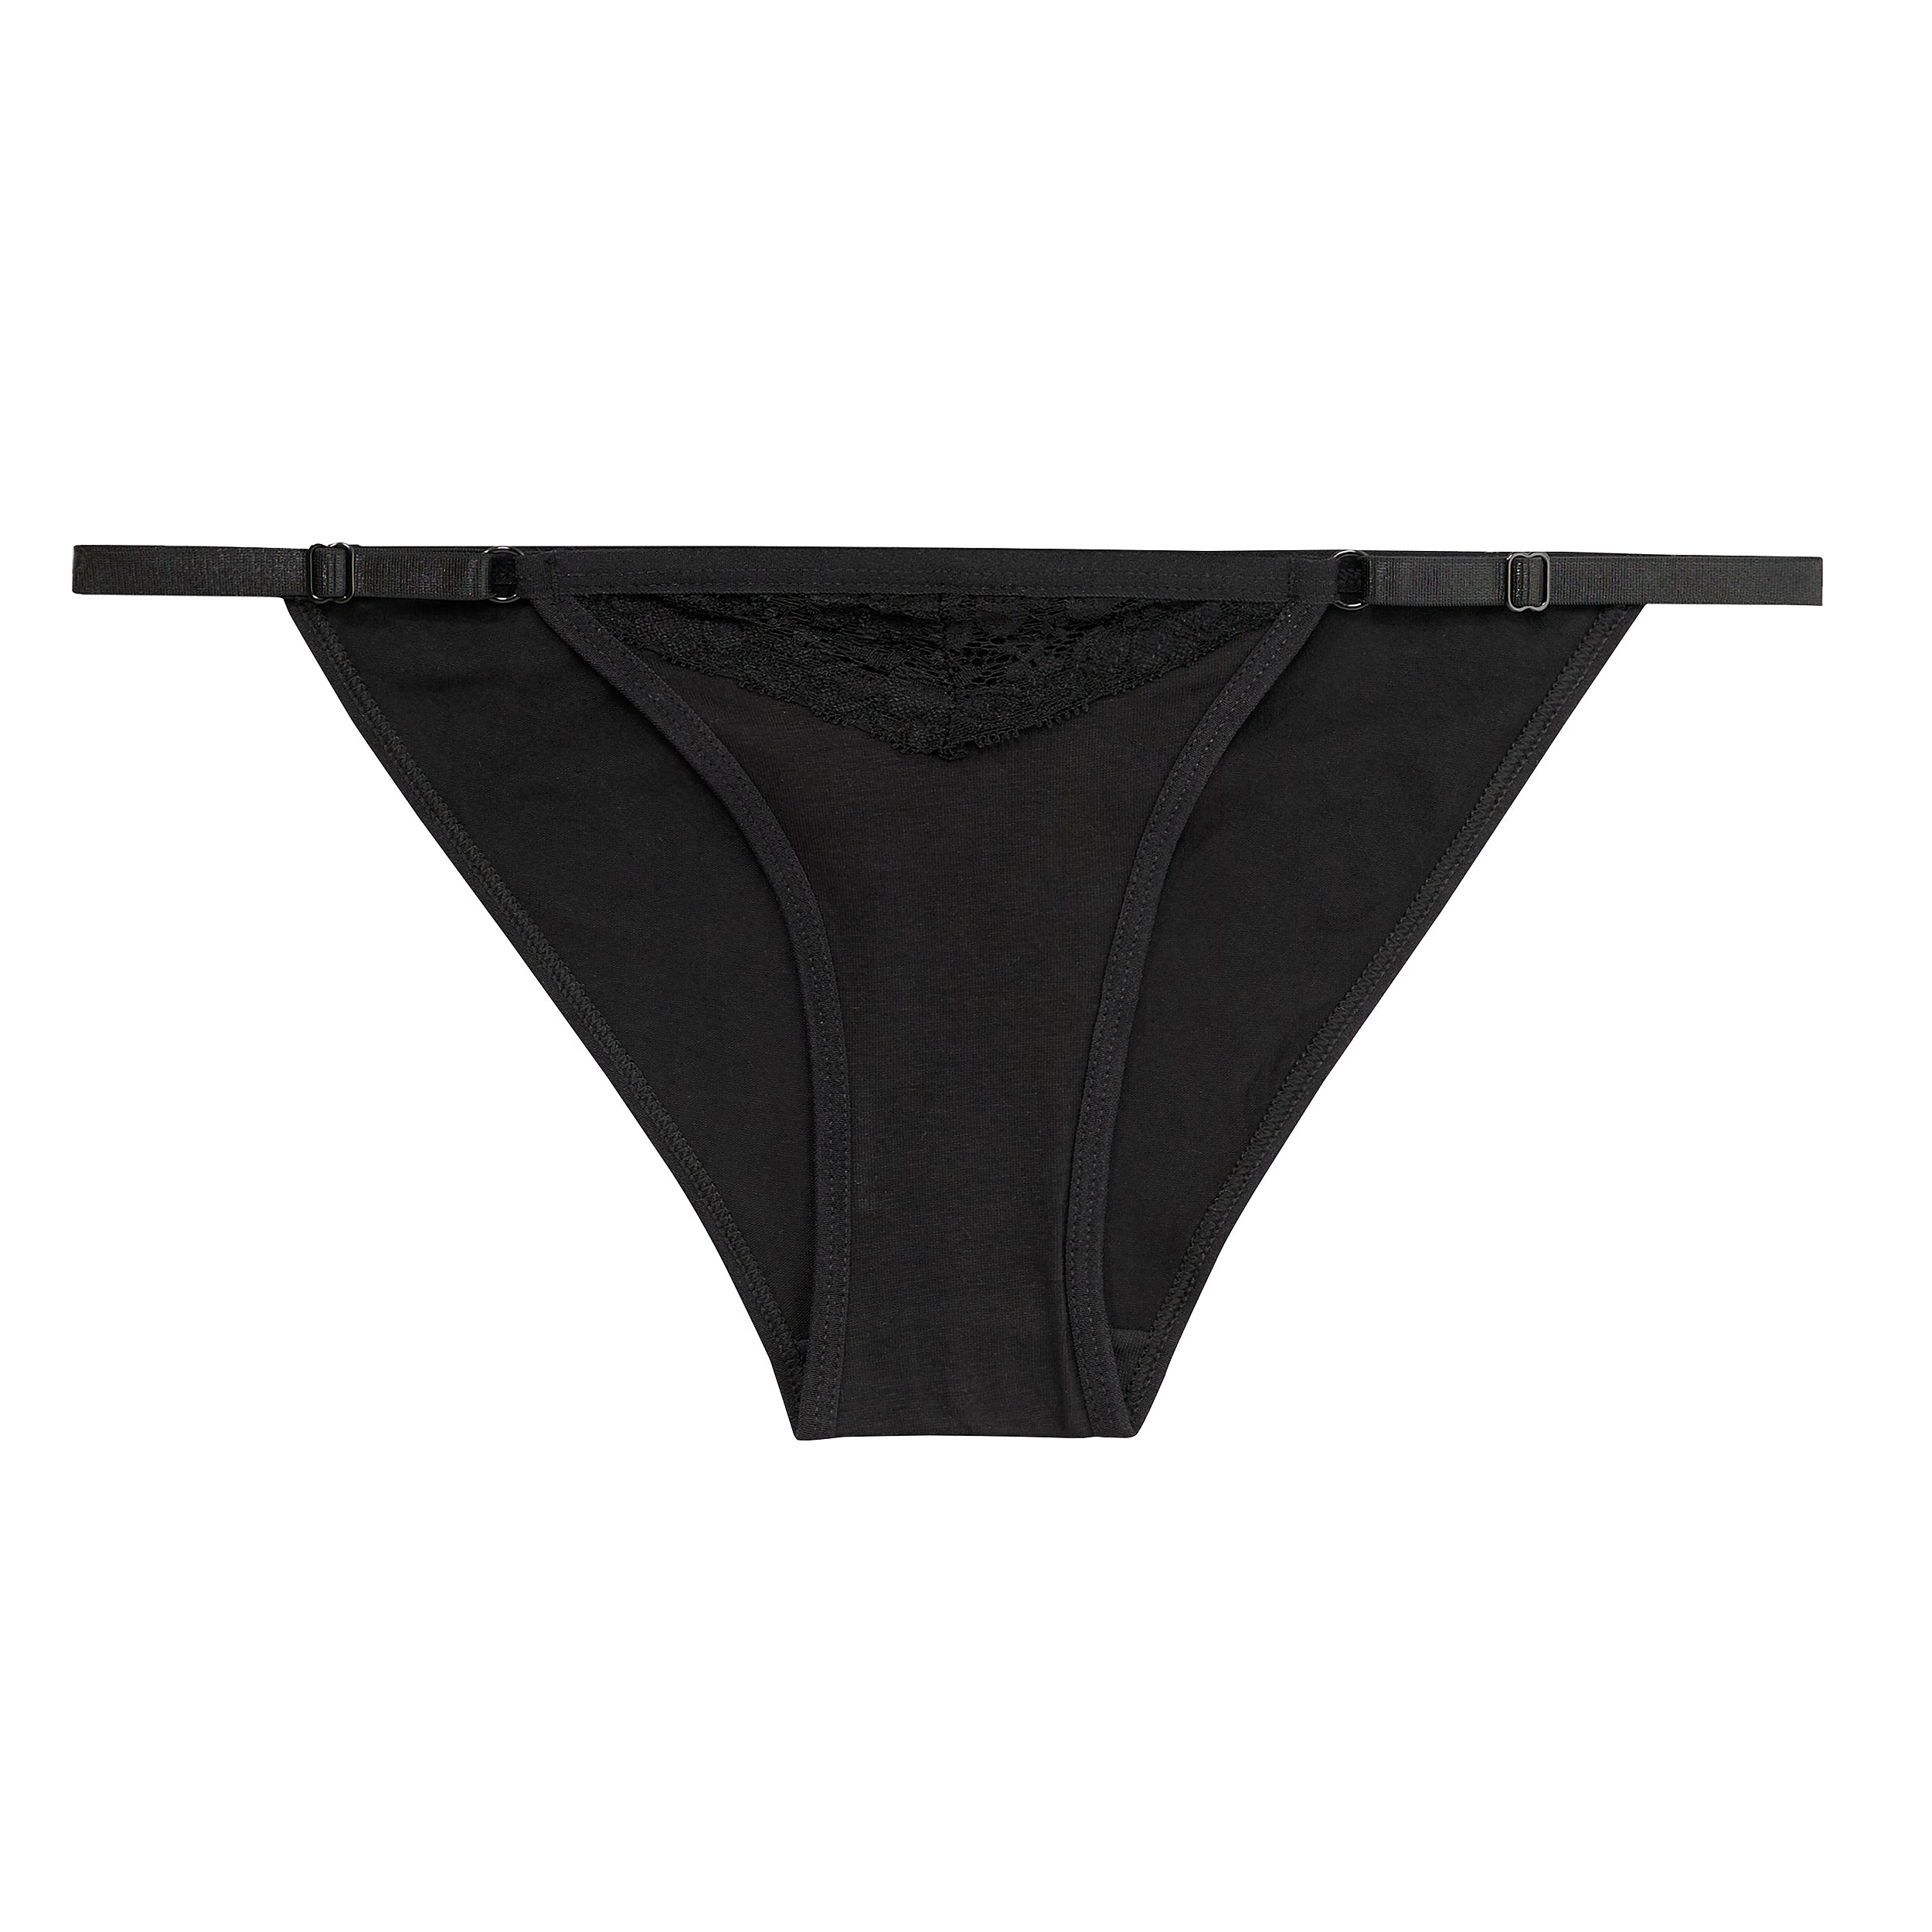 Nabtos Women’s Cotton Panties Black Set Floral Lace Adjustable Strap String Bikini Underwear Low Rise Hi Cut Cheeky Panties pack 6